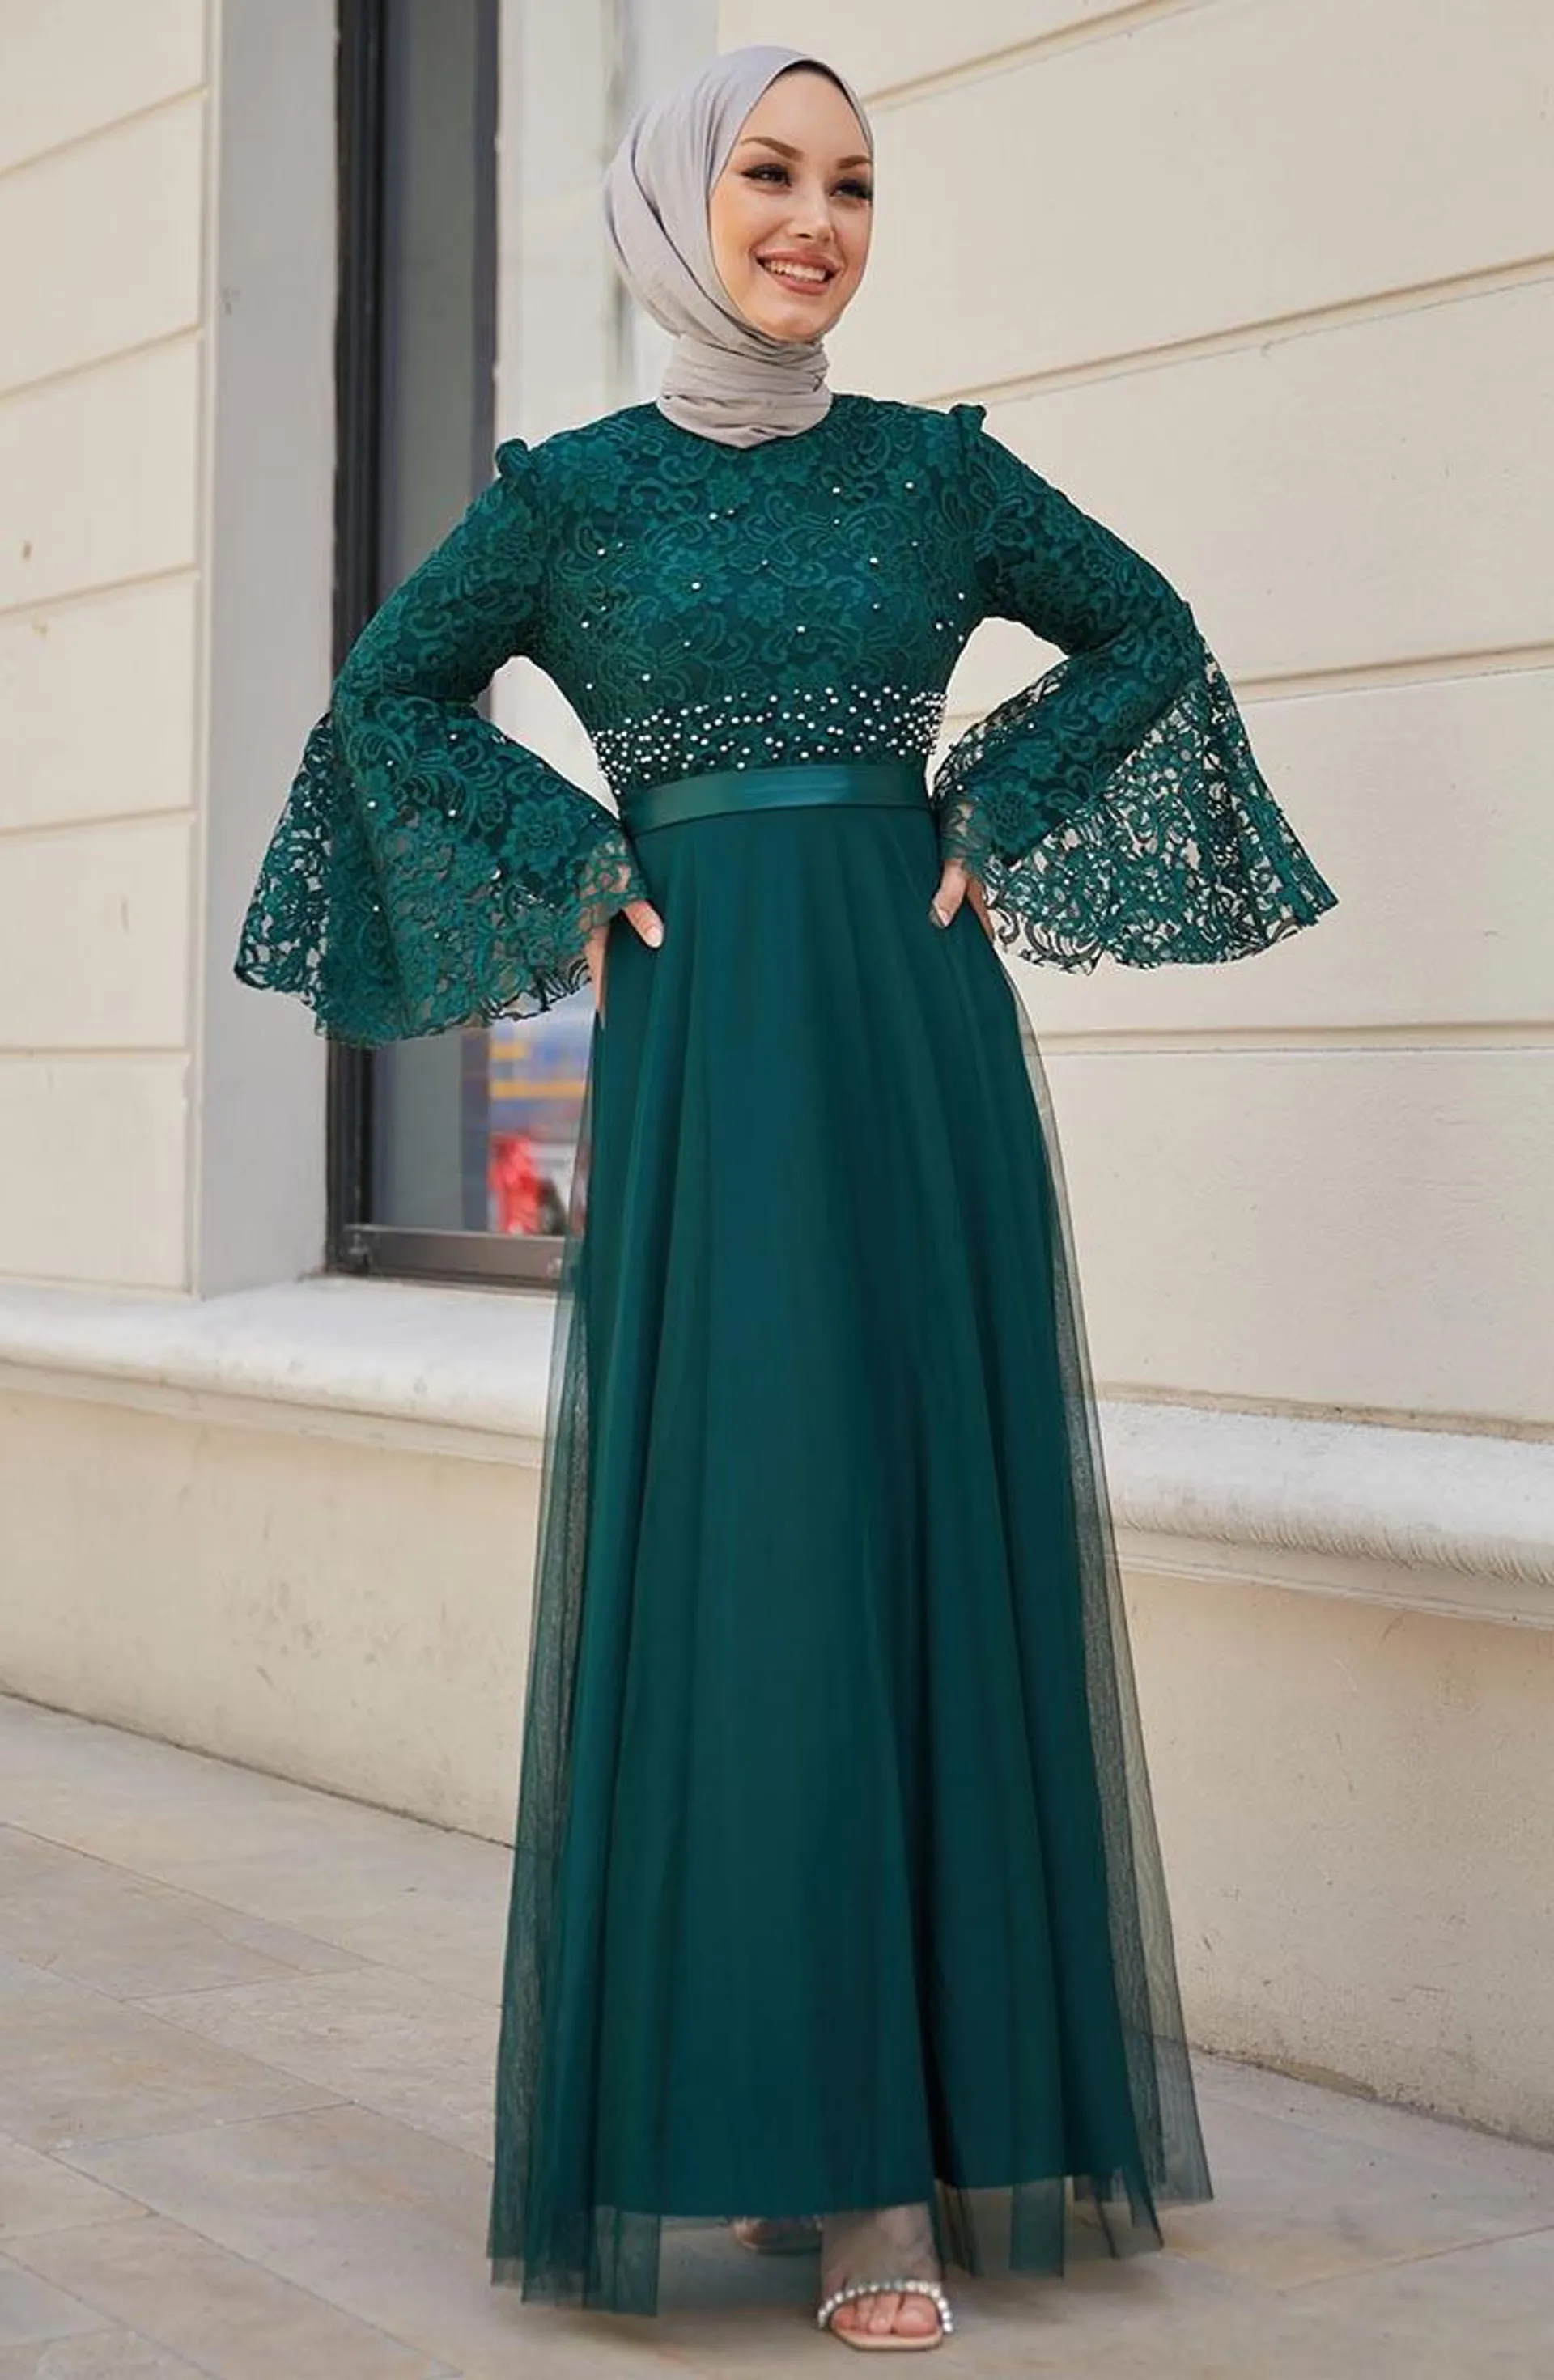 Lace Evening Dress 11153-04 Emerald Green 11153-04